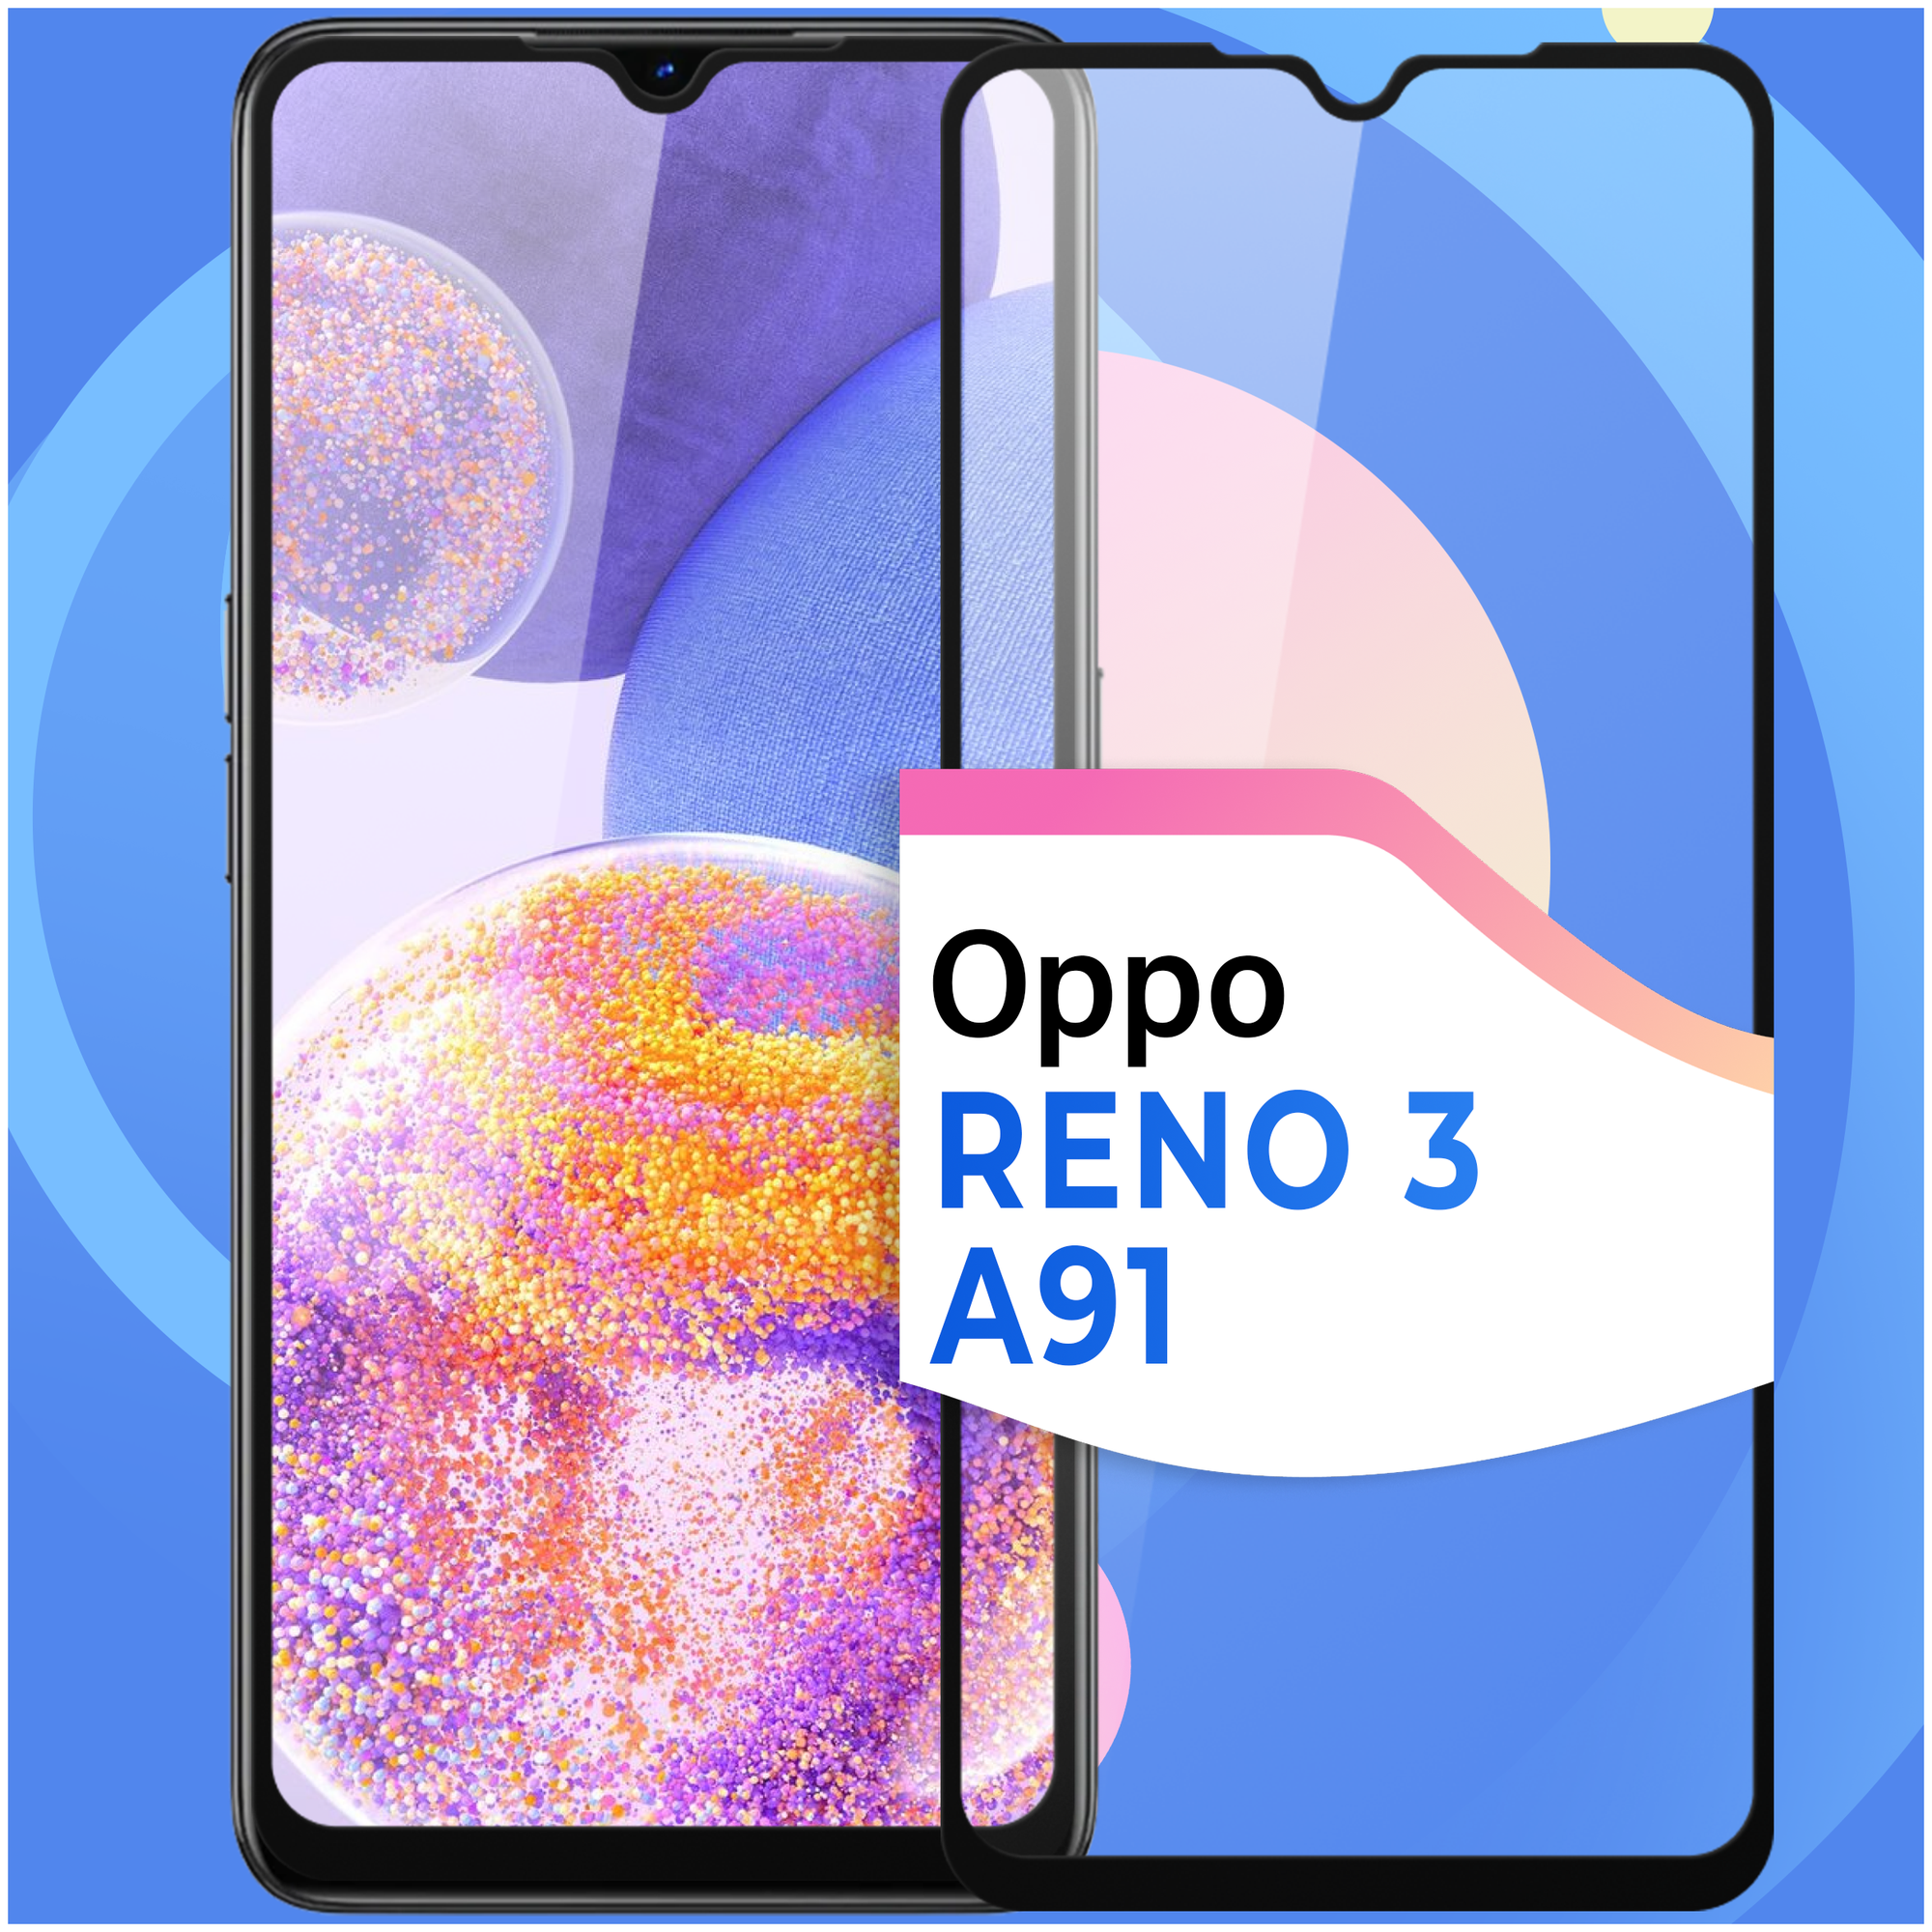 Комплект 2 шт. Противоударное стекло для смартфона Oppo Reno 3 и Oppo A91 / Защитное стекло с олеофобным покрытием на телефон Оппо Рено 3 и Оппо А91